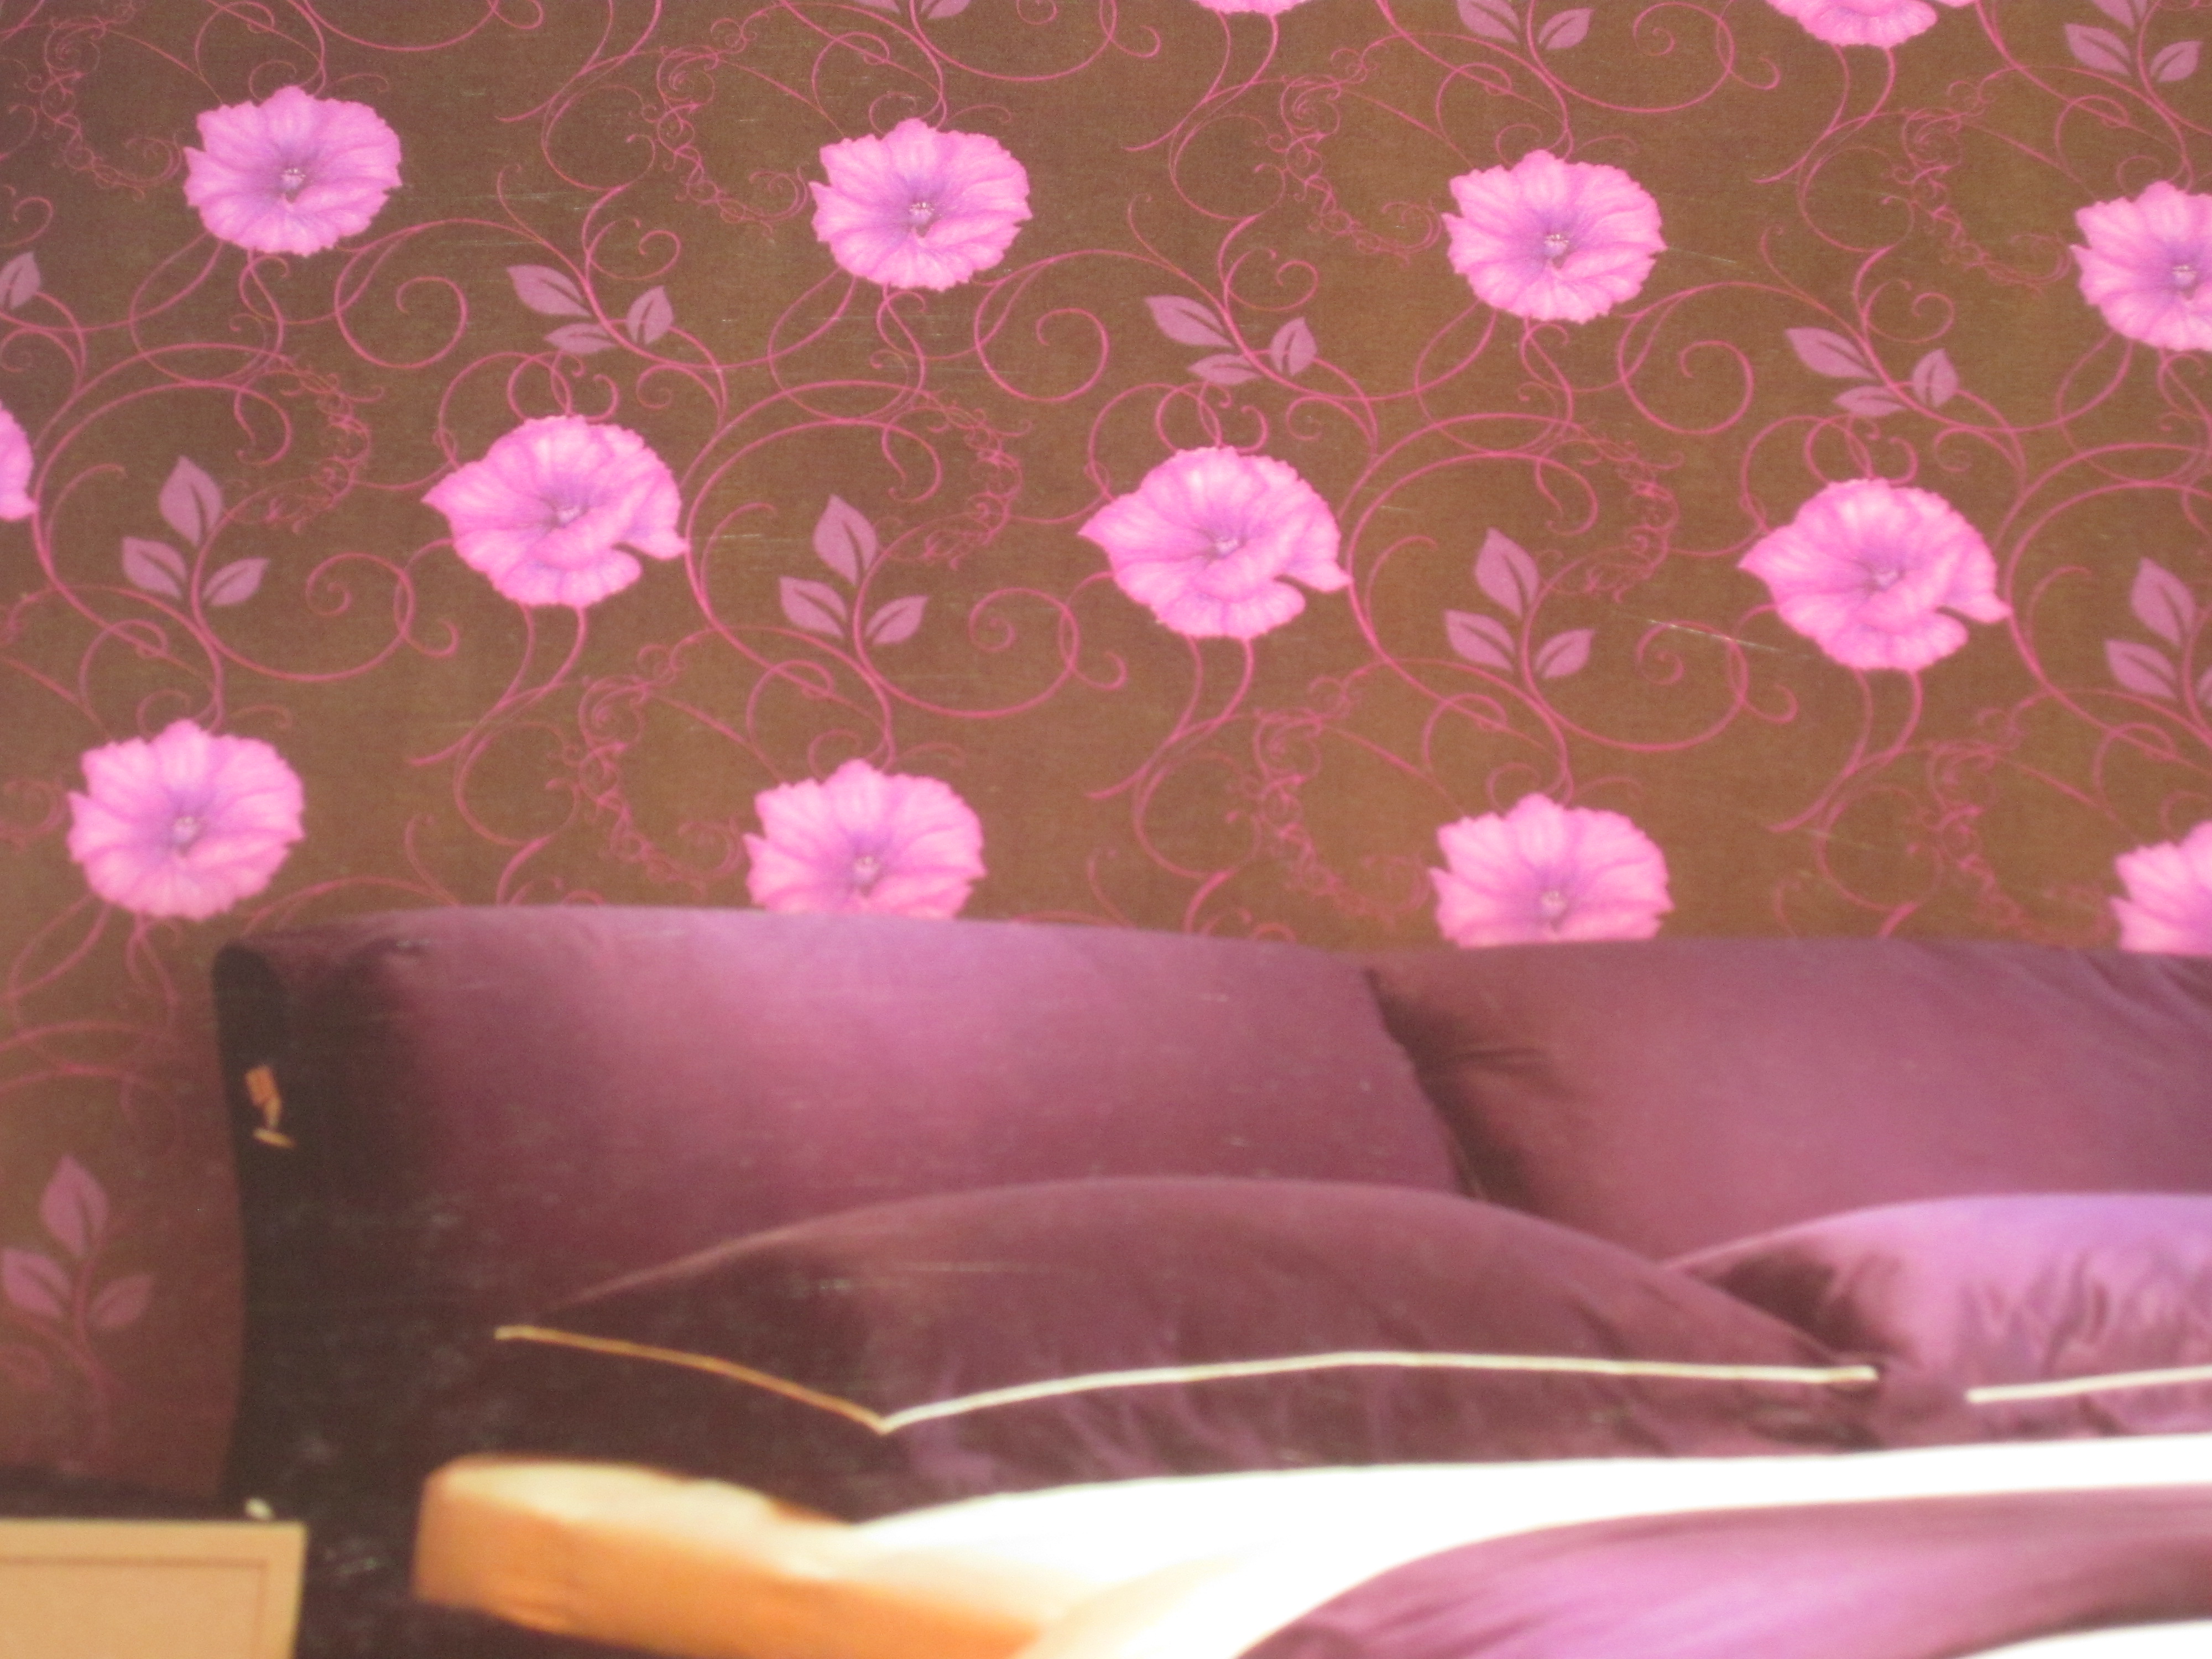 Wallpaper Dinding Ruang Tamu Minimalis Pink Dshdesign4kinfo